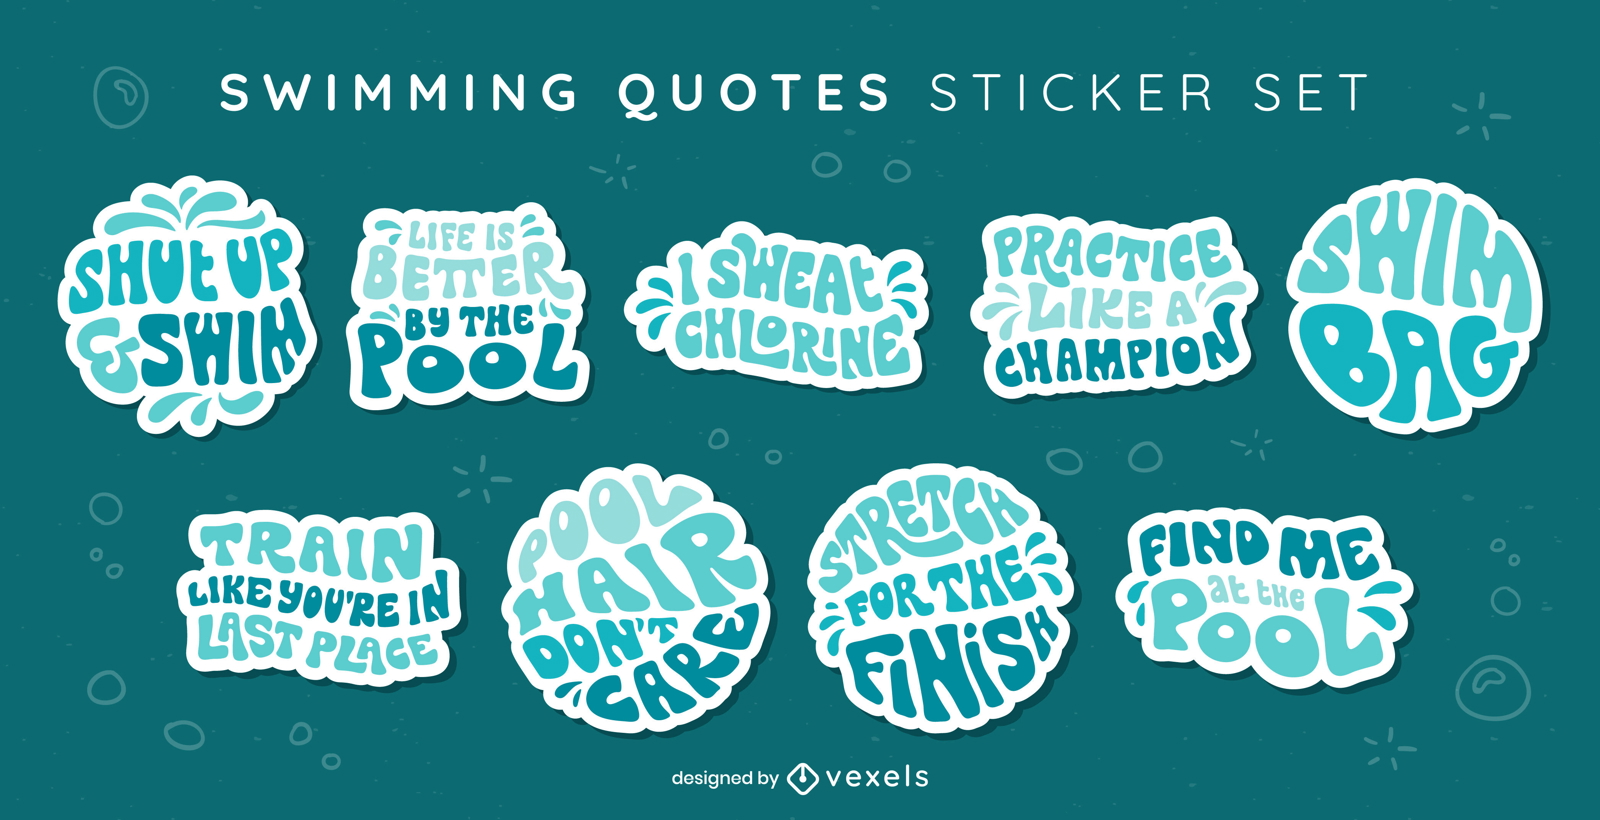 Pool swimming quotes sticker set